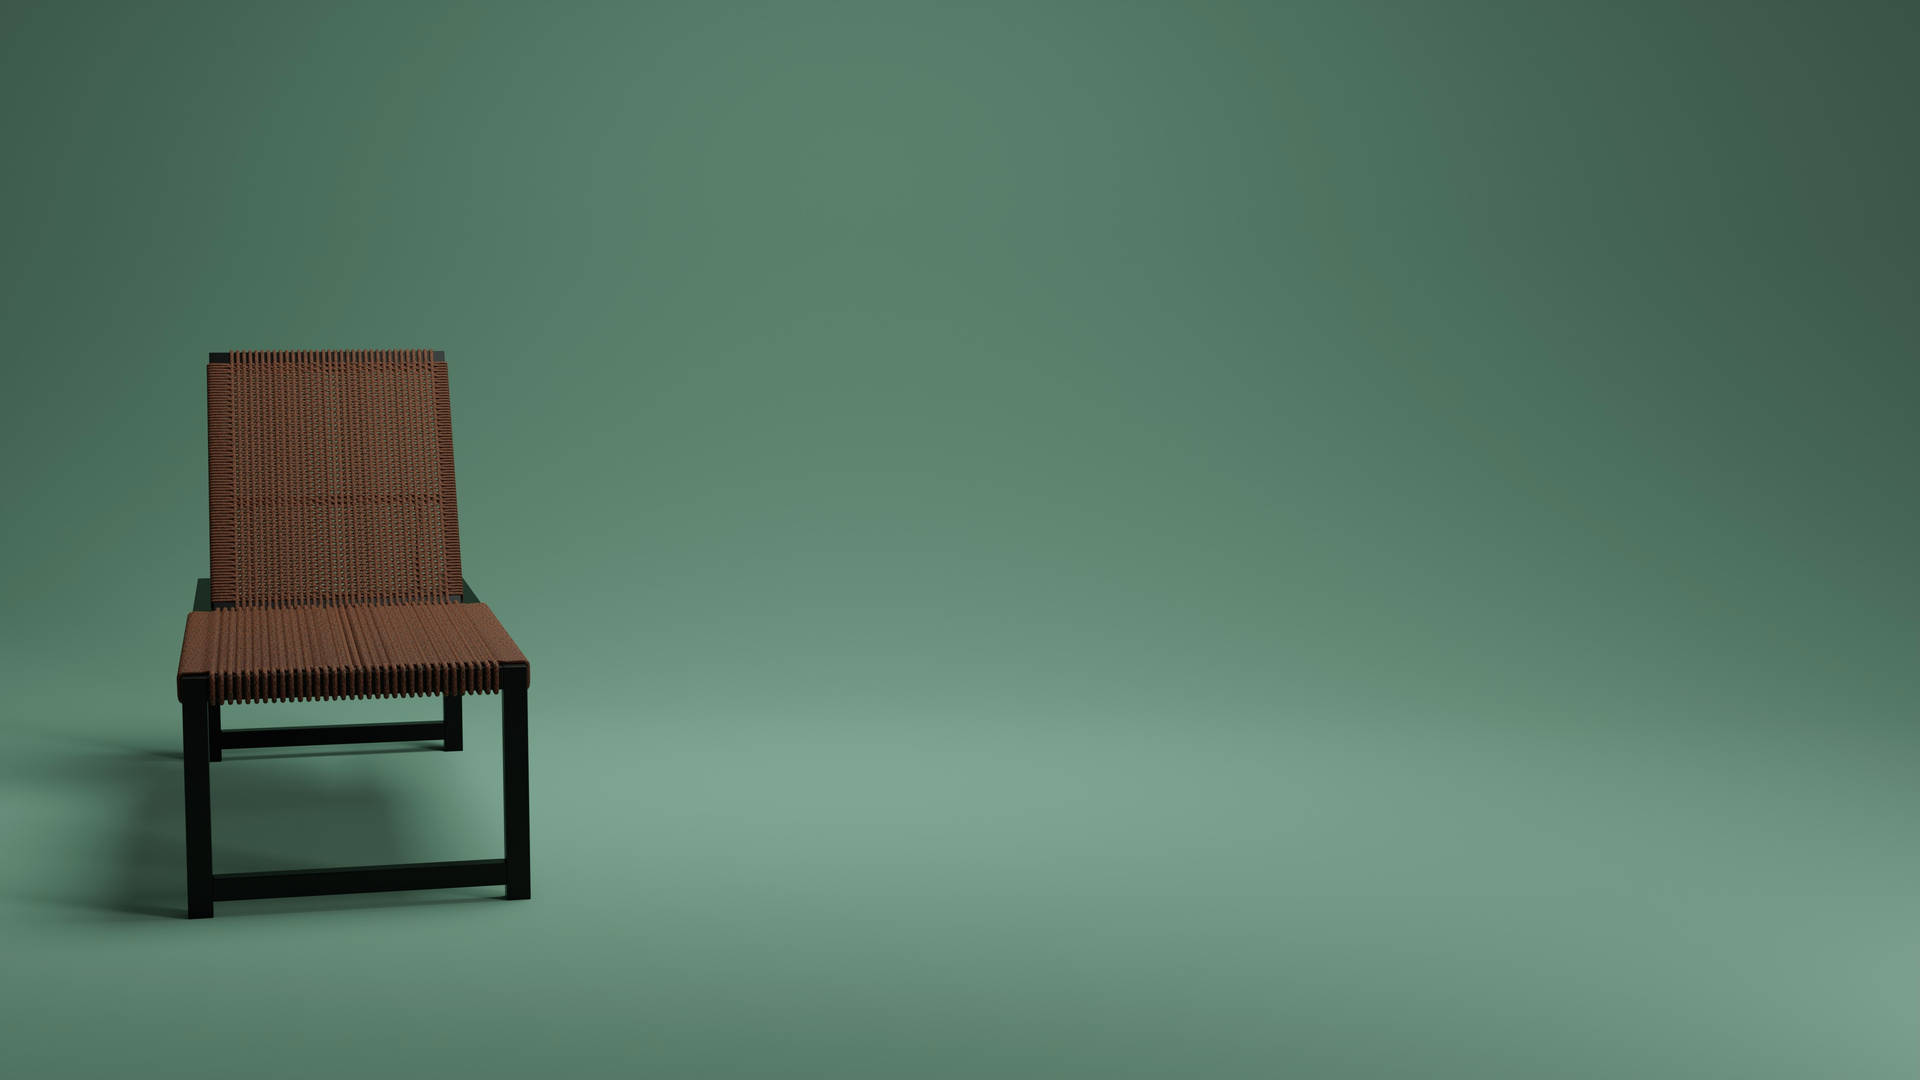 Chair On Green Minimalist Wall